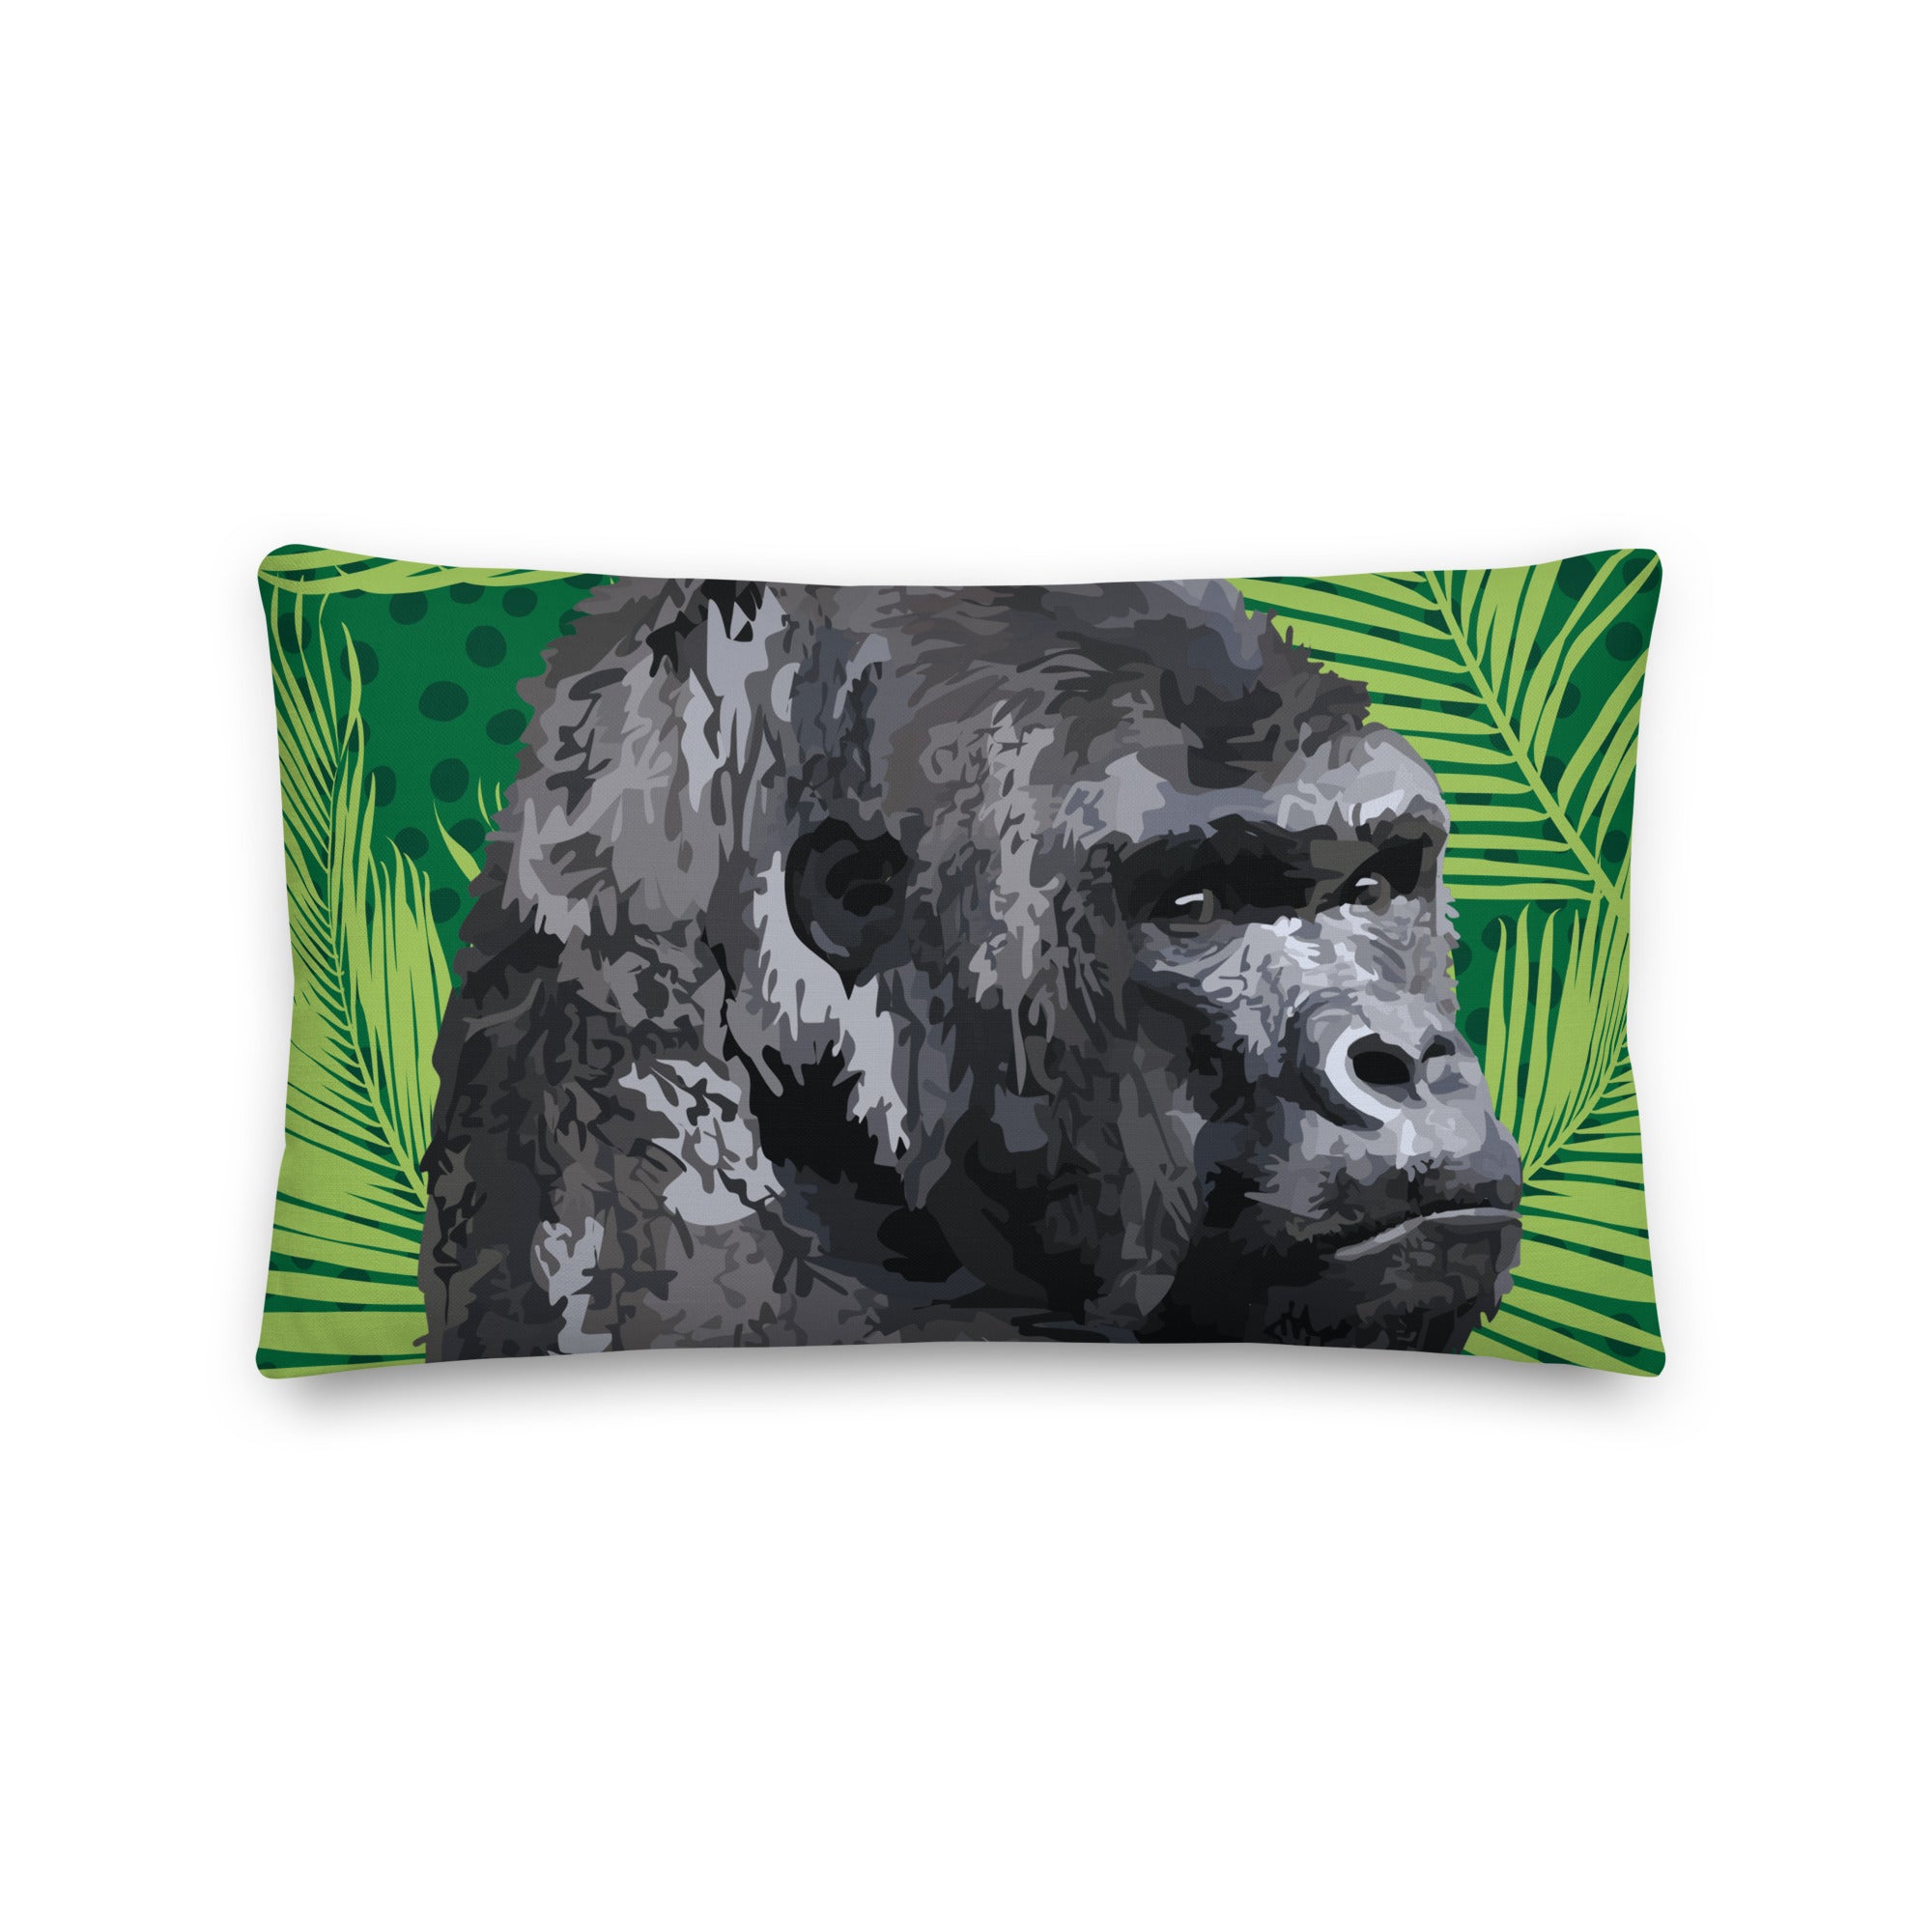 Premium Sofa Kissen Dschungel Gorilla